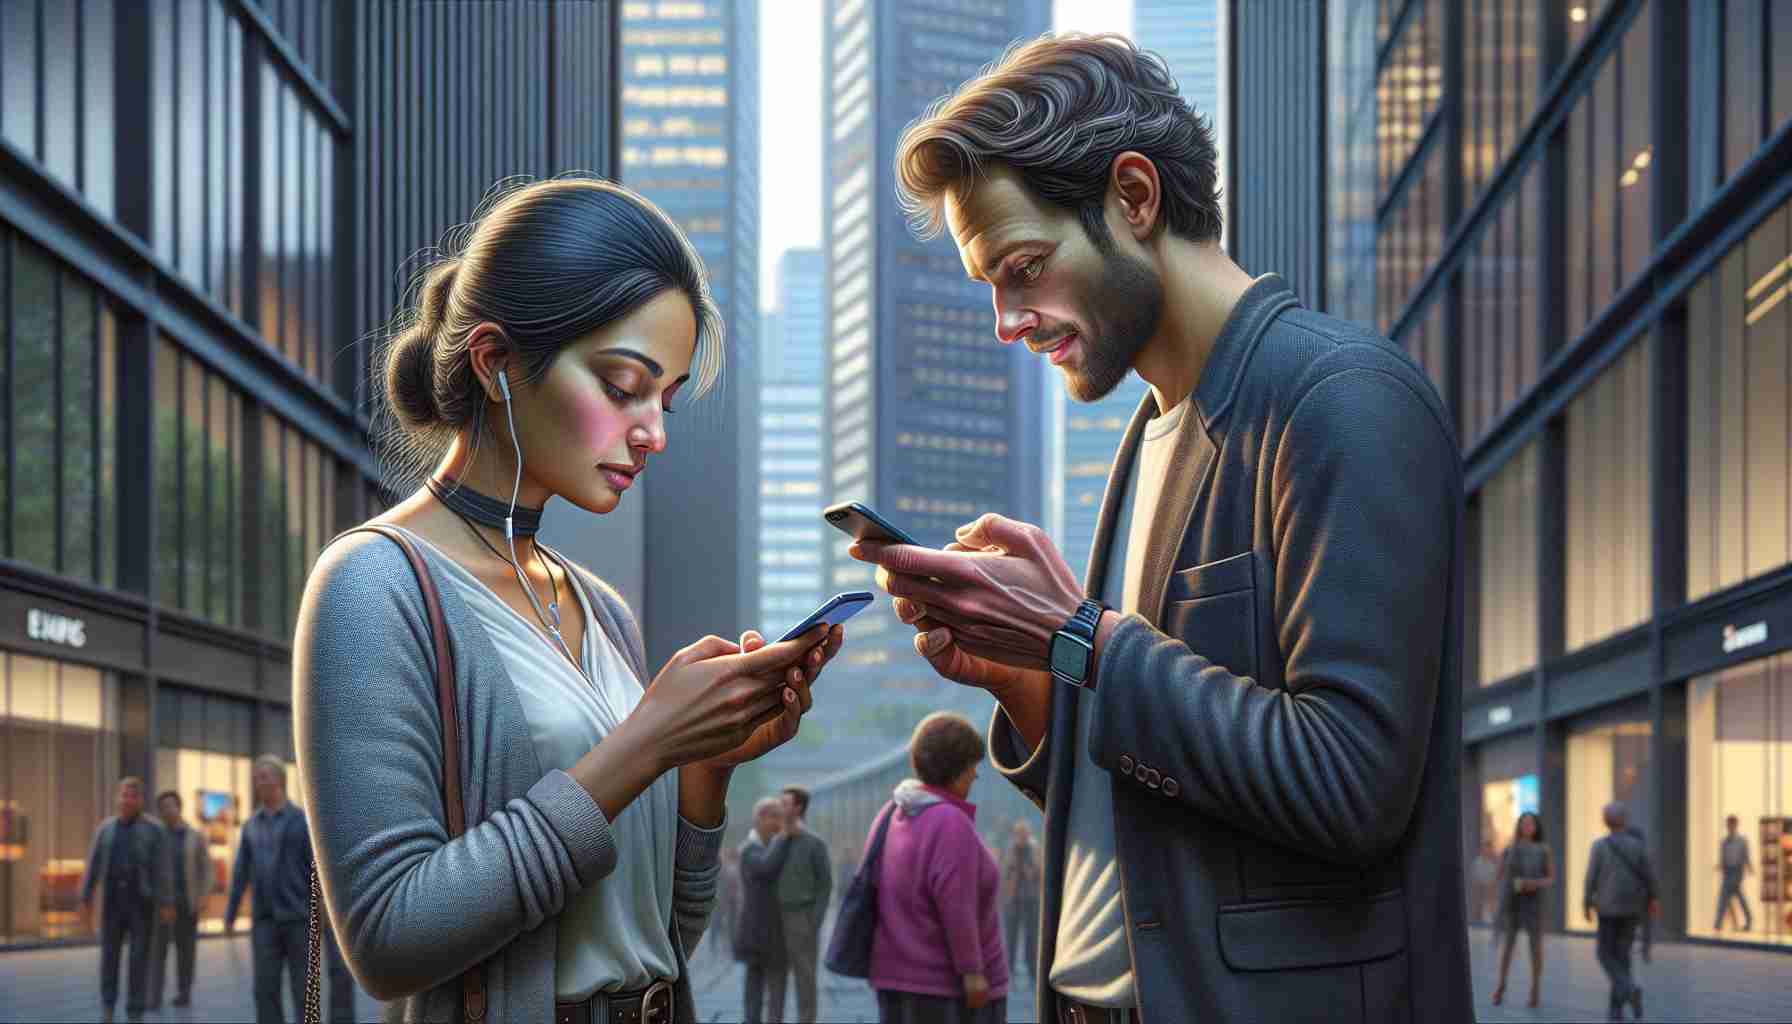 Smartphones’ Grip on Modern Interactions